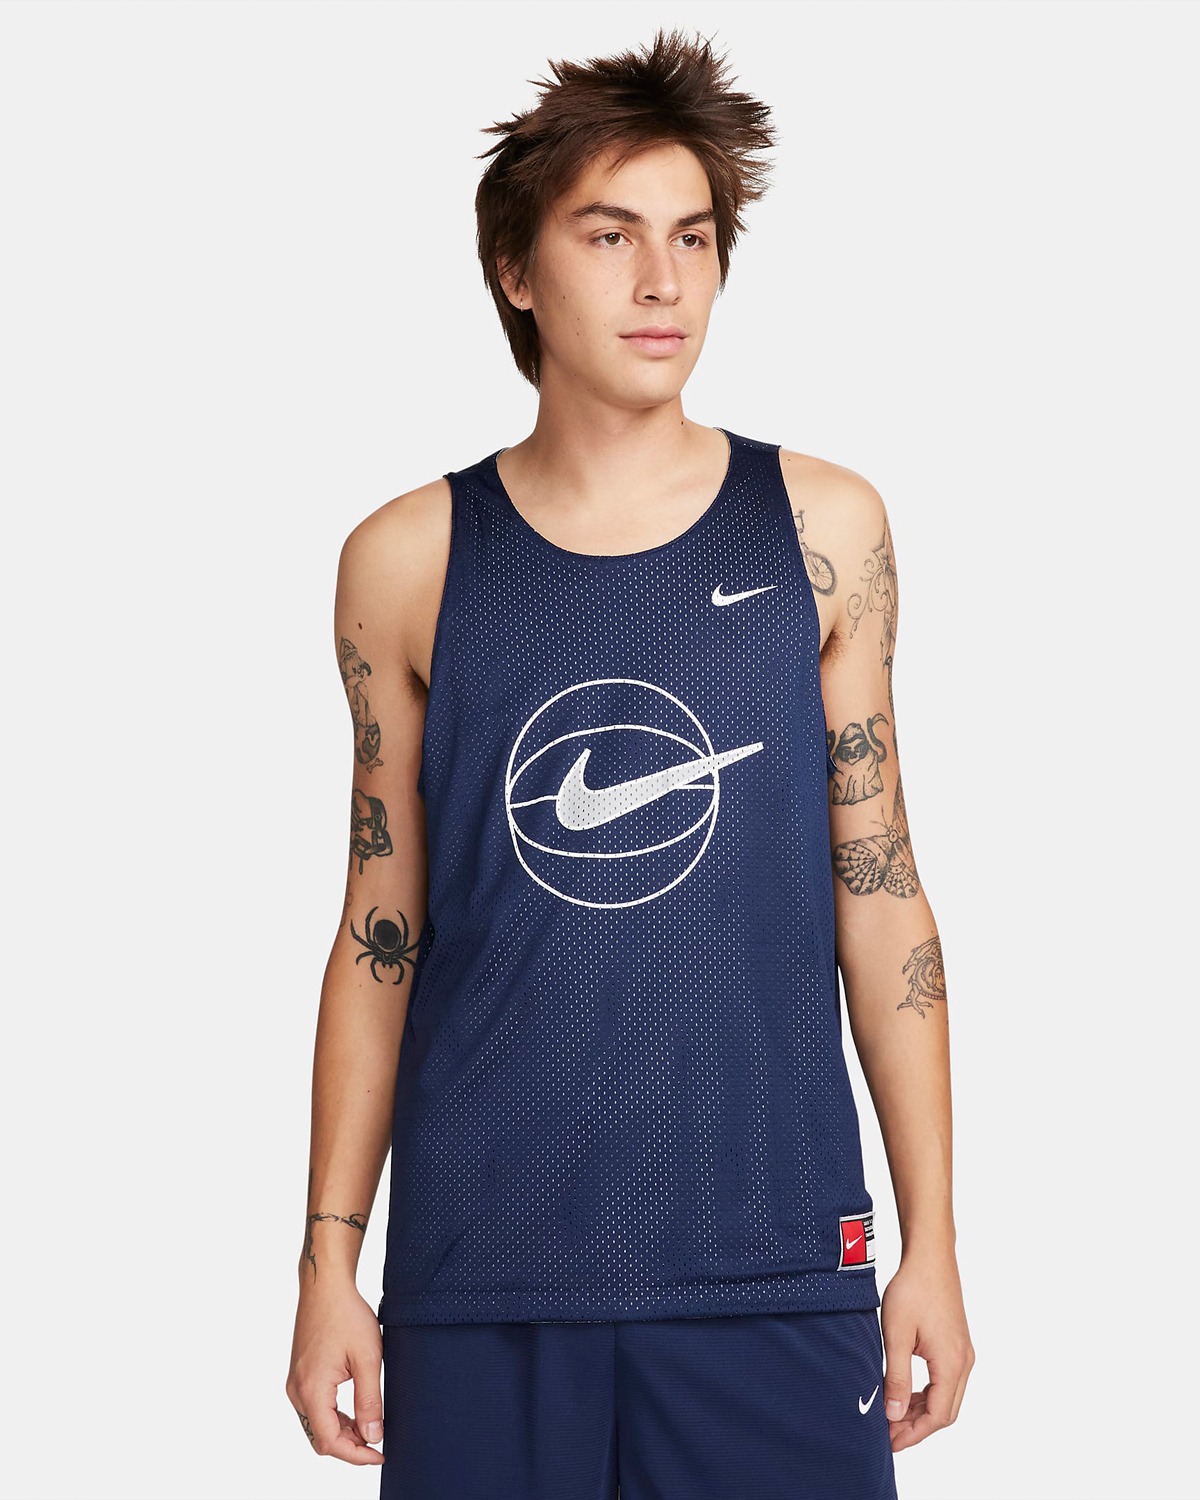 Nike-Authentics-Reversible-Jersey-Midnight-Navy-Wolf-Grey-1